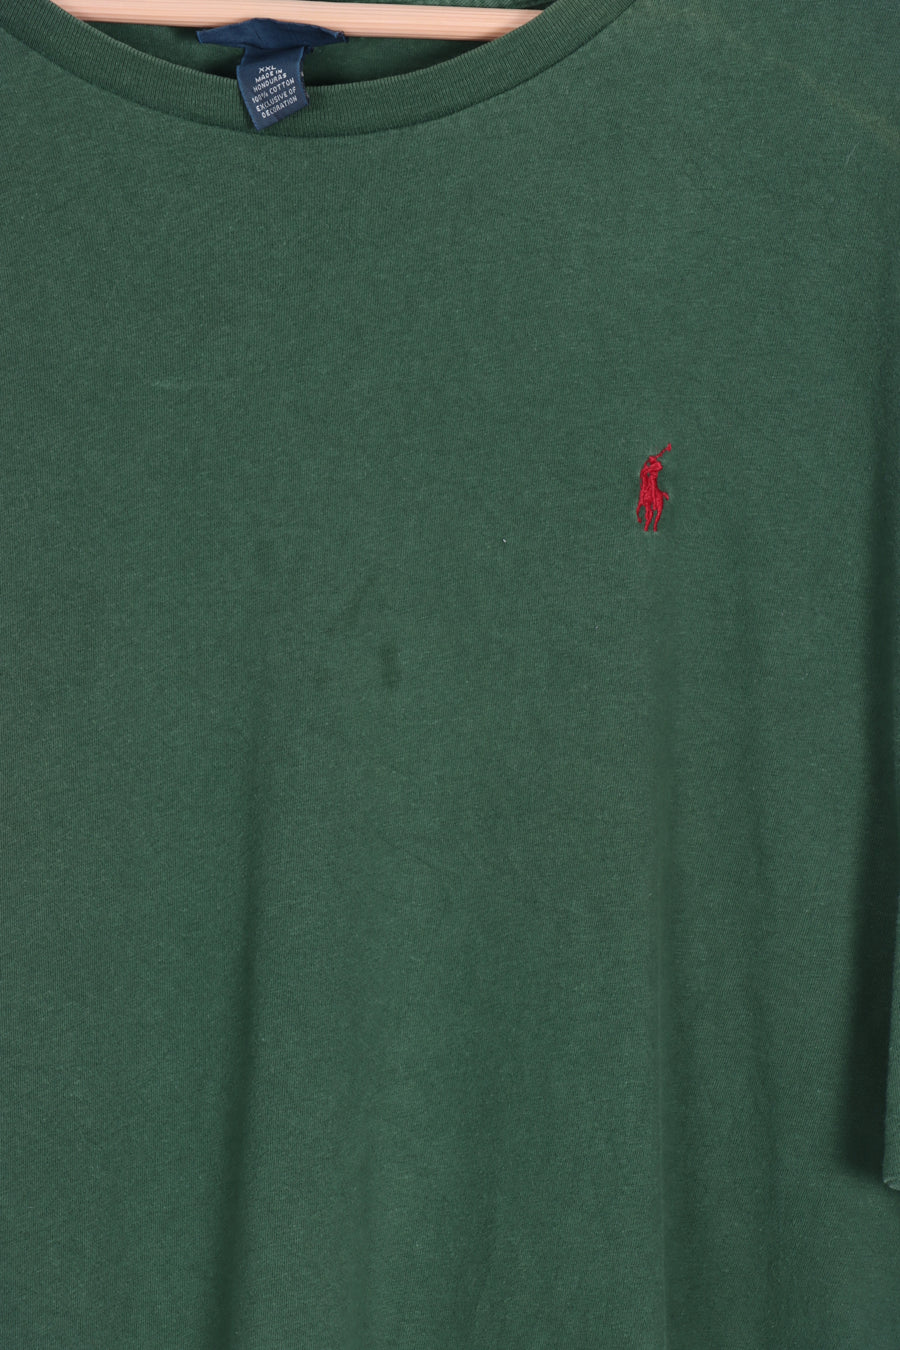 RALPH LAUREN Green & Red Embroidered Logo Single Stitch Tee (XXL)